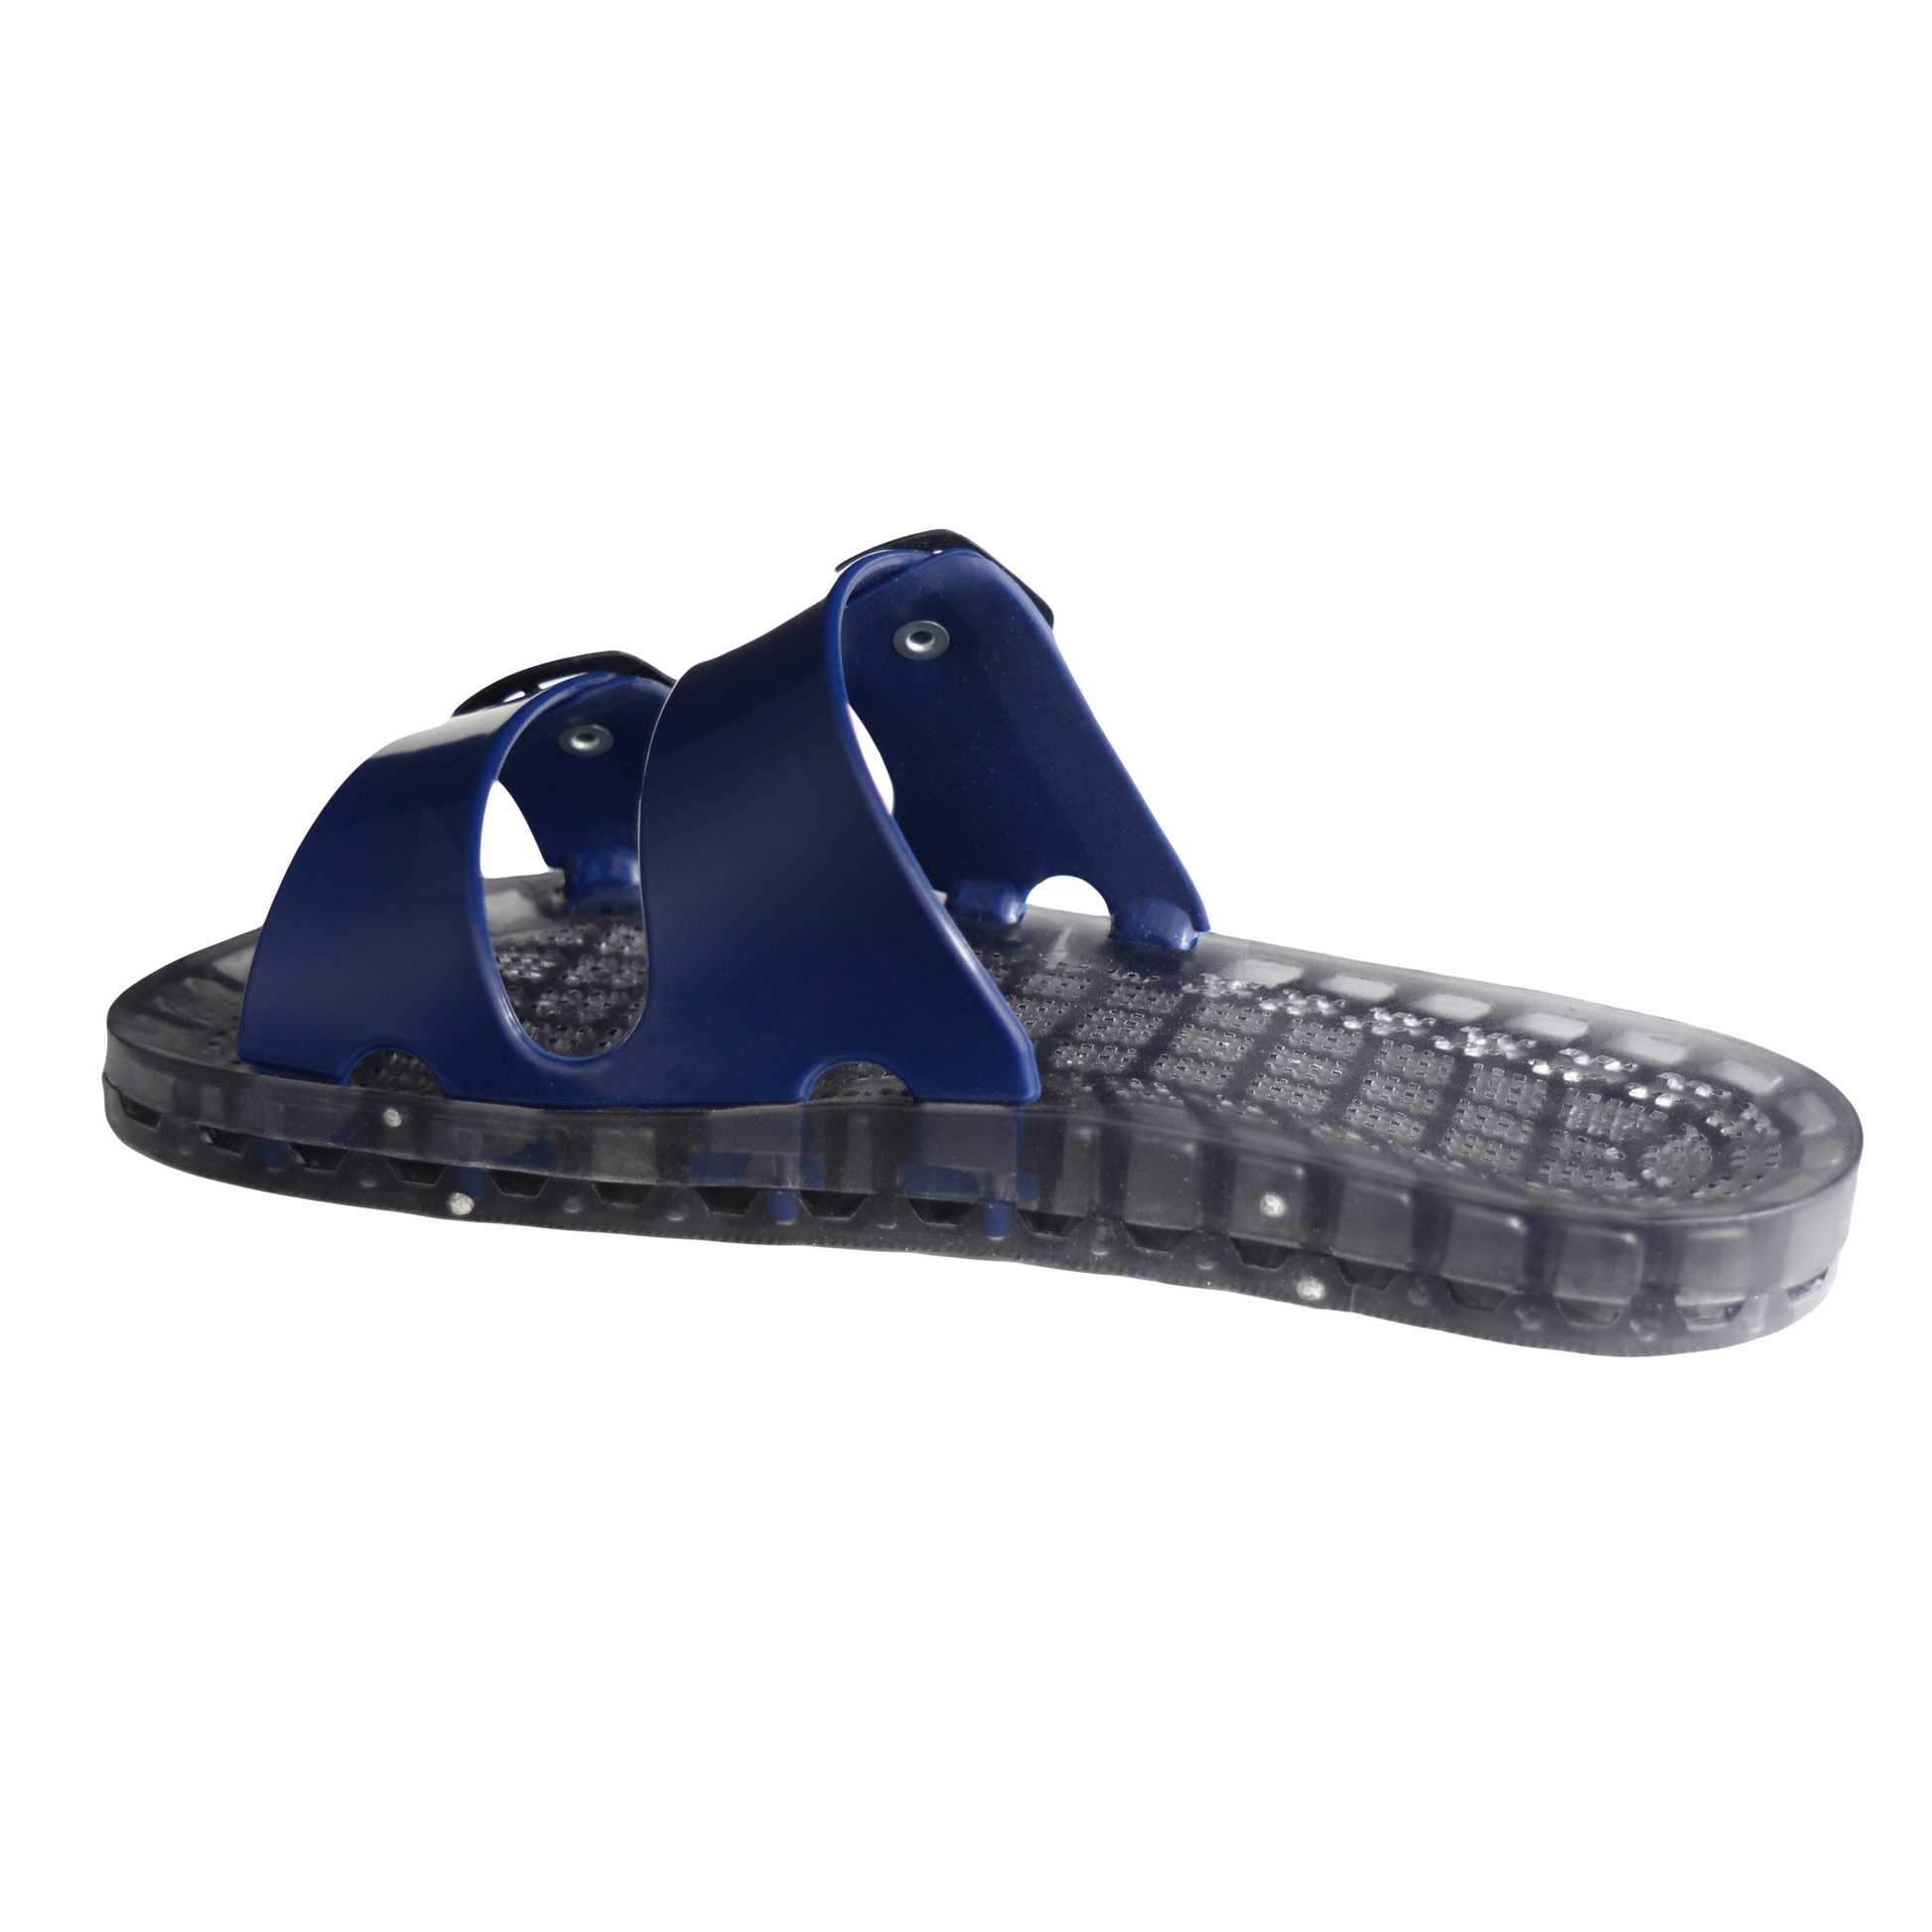 La Jolla - London Slide Sandal - Blue